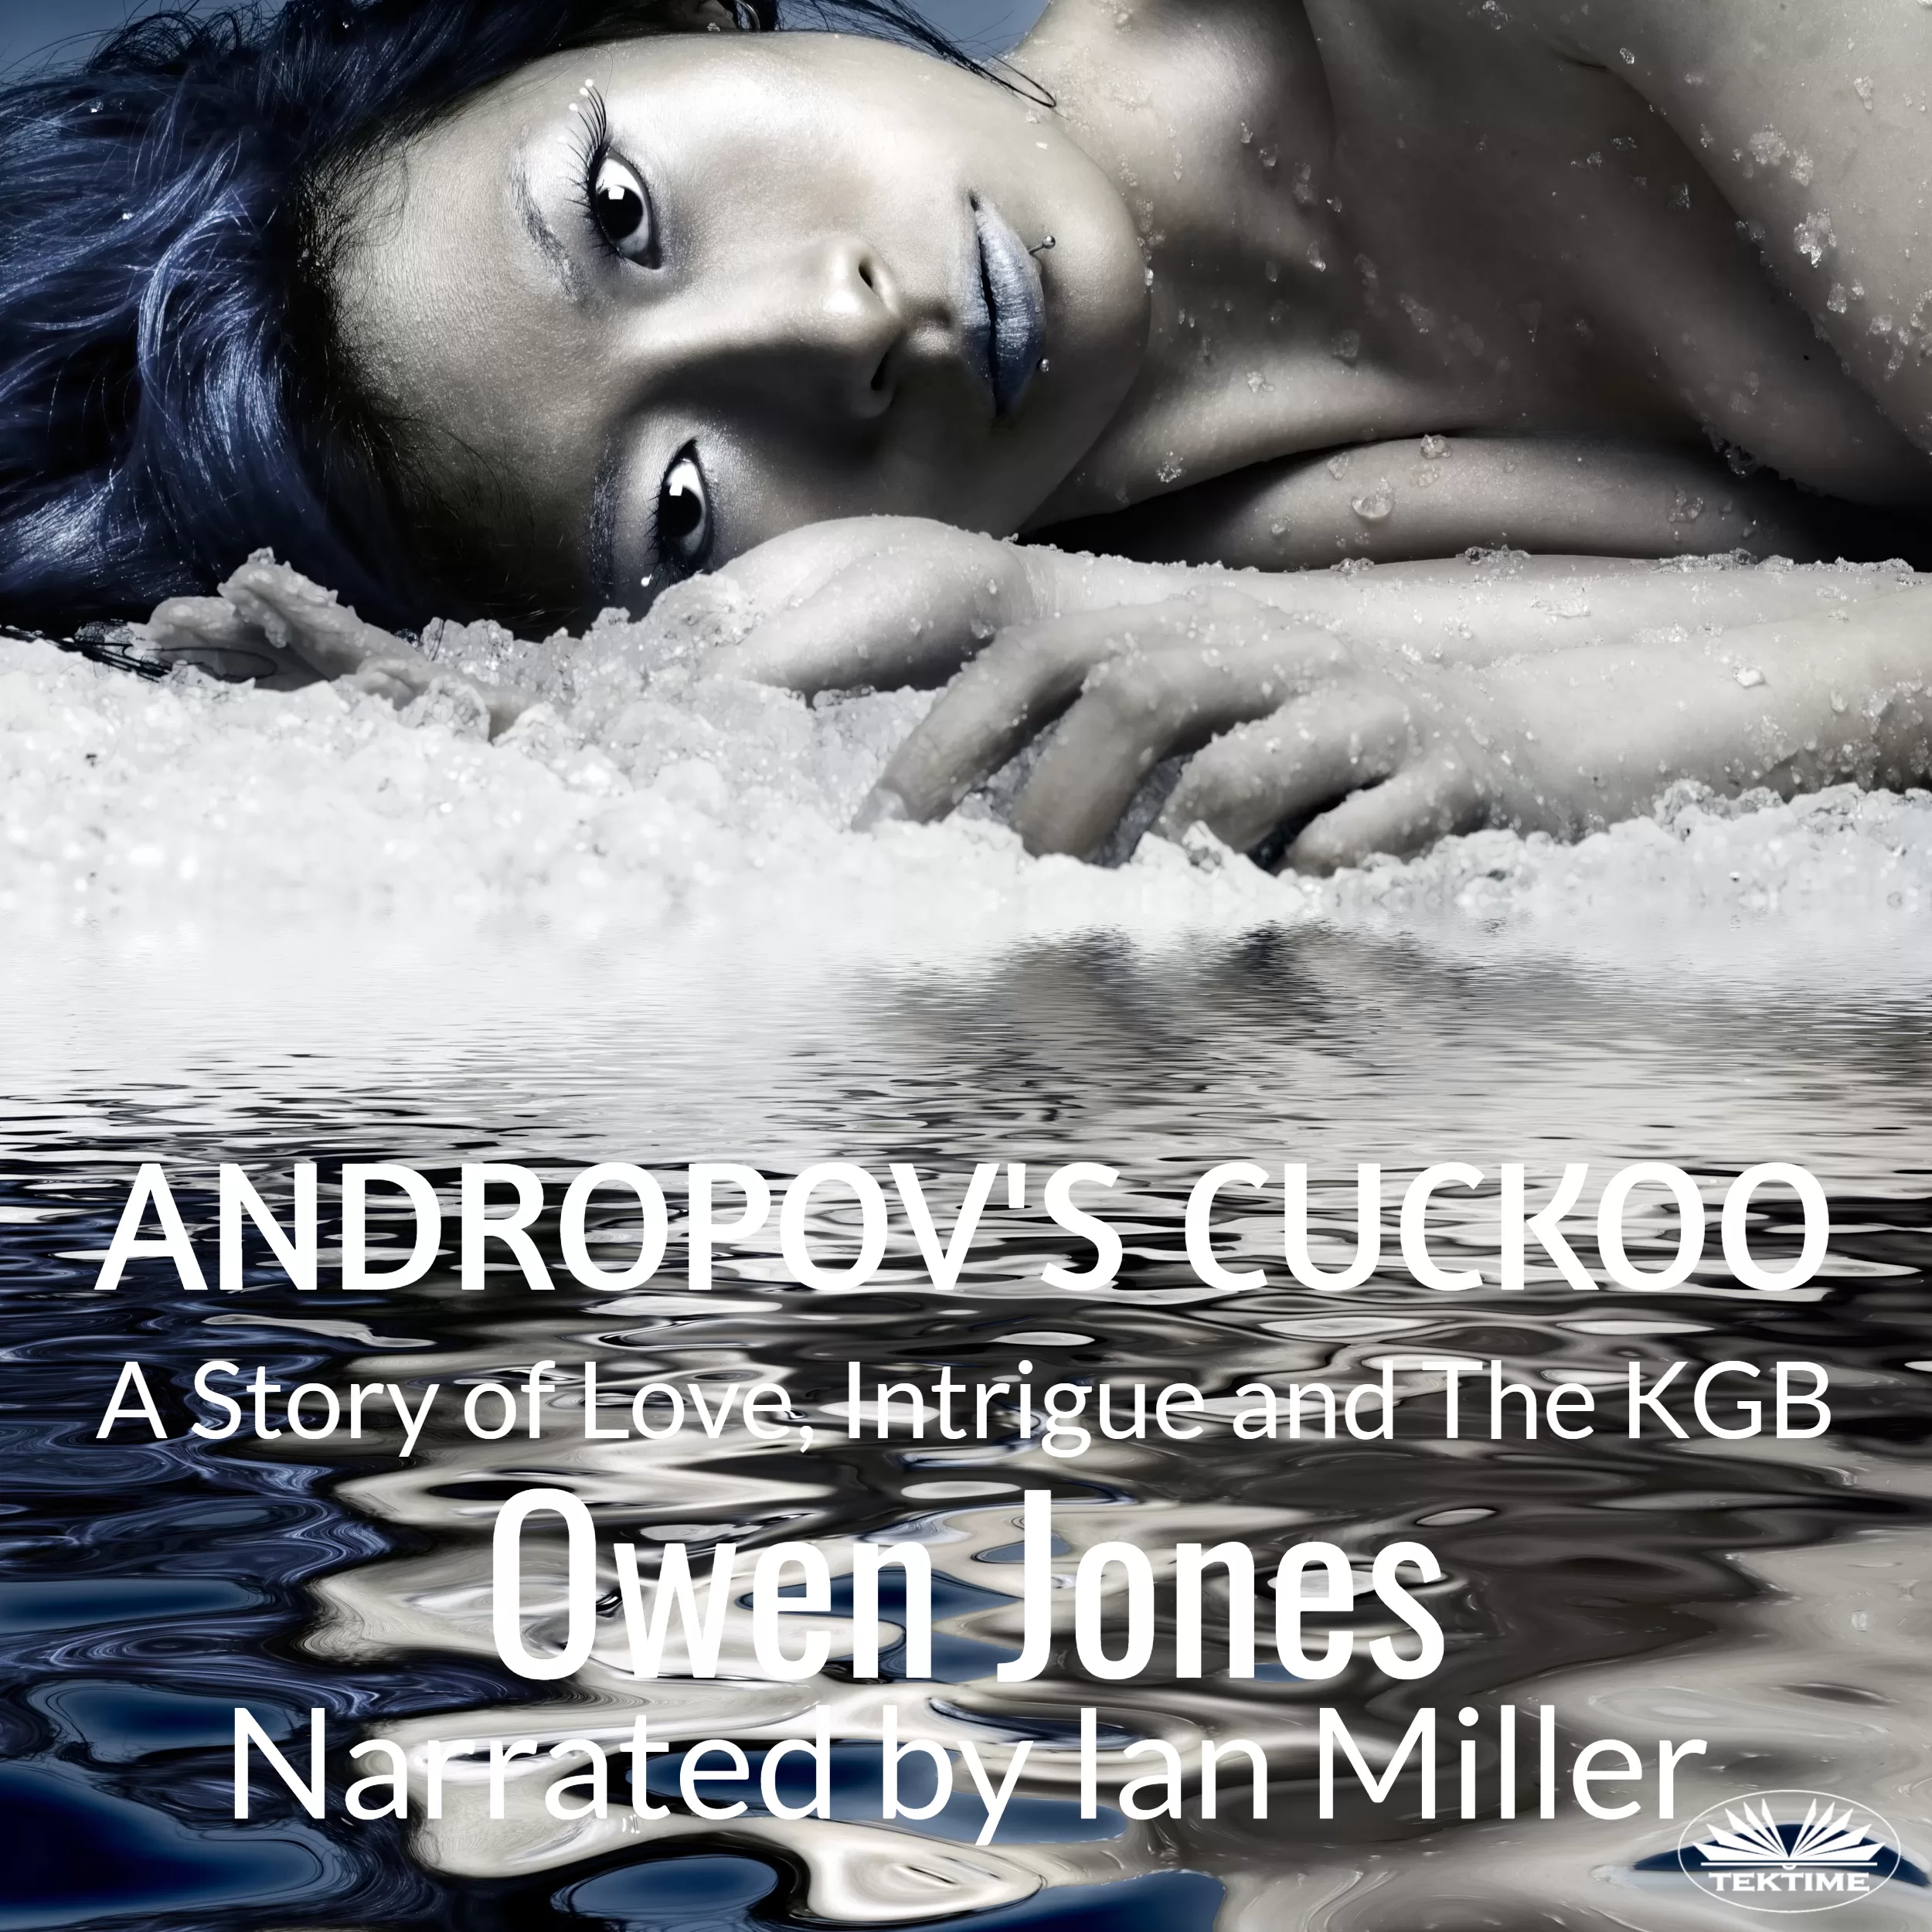 Andropovs Cuckoo - audiobook